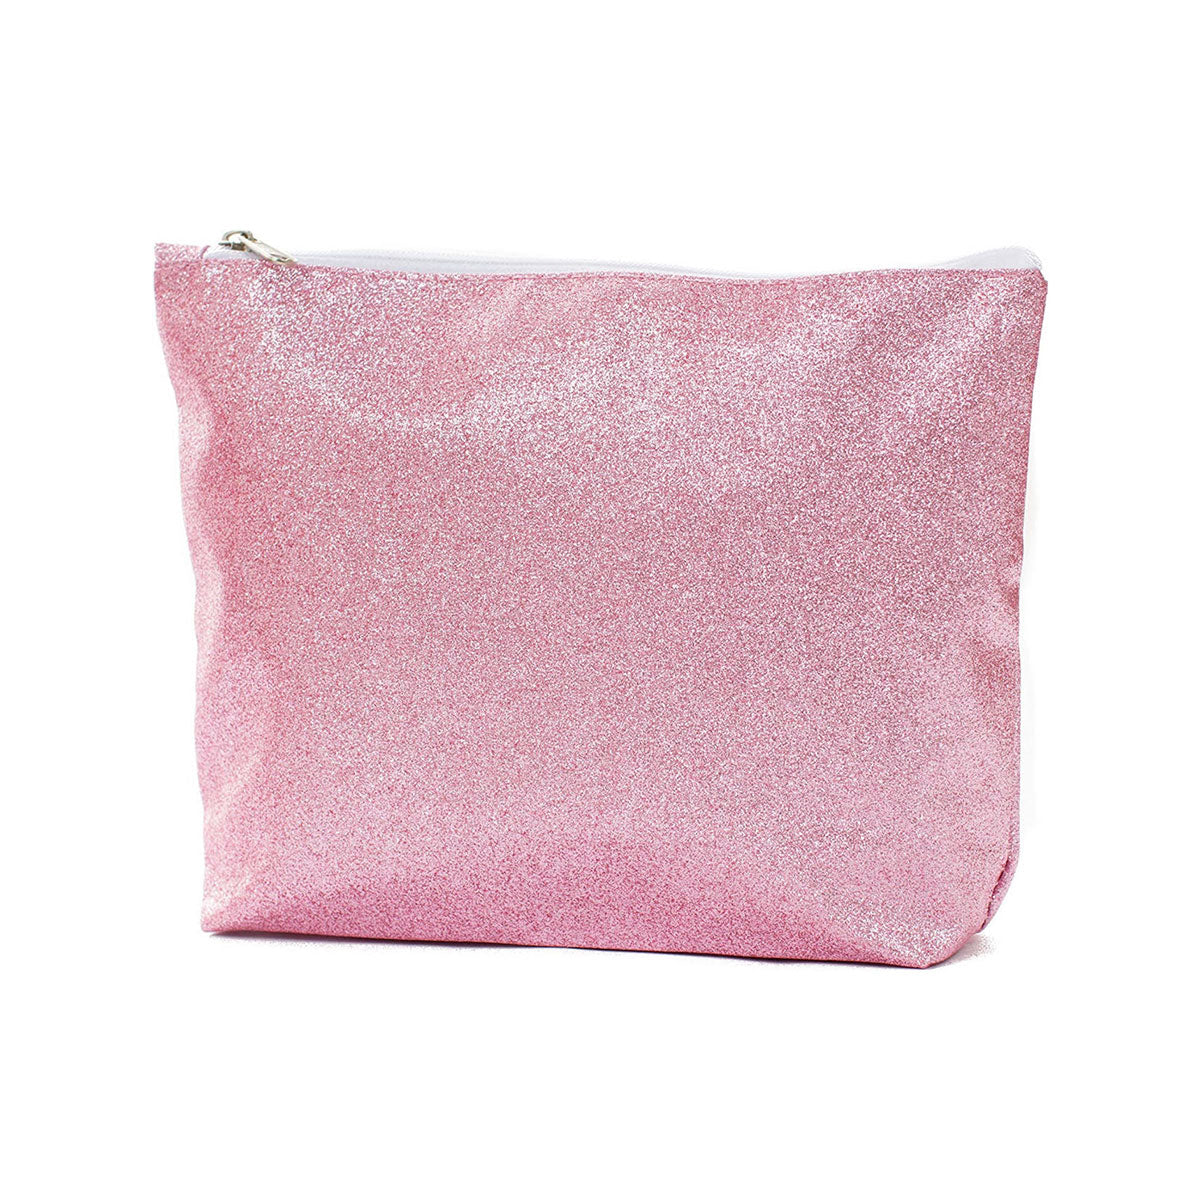 Glitter Pouch - Pink